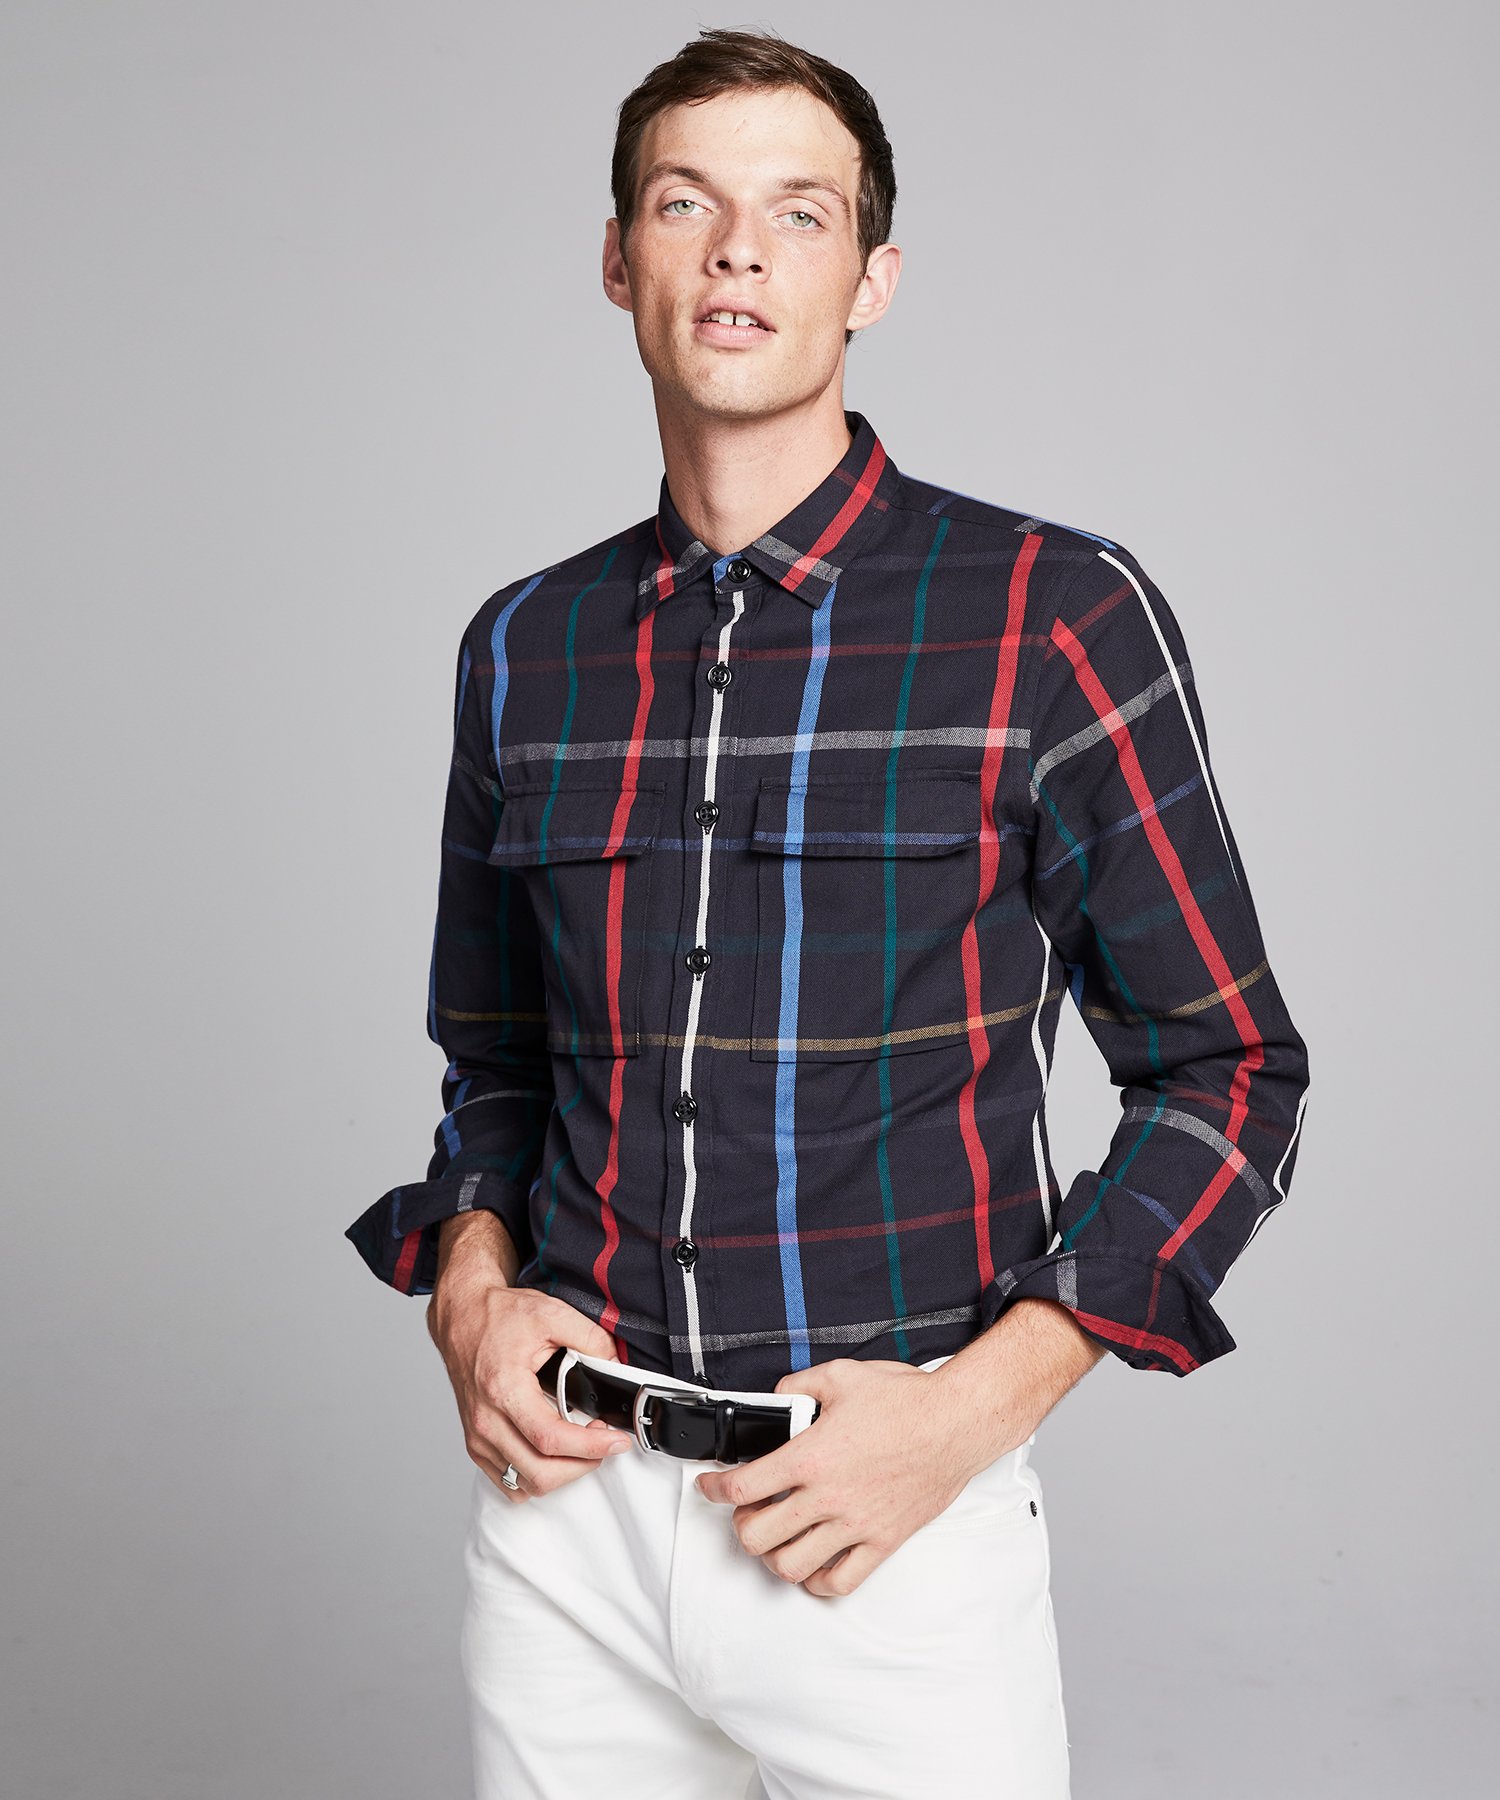 Multi Color Check Shirt Jacket | The Fashionisto